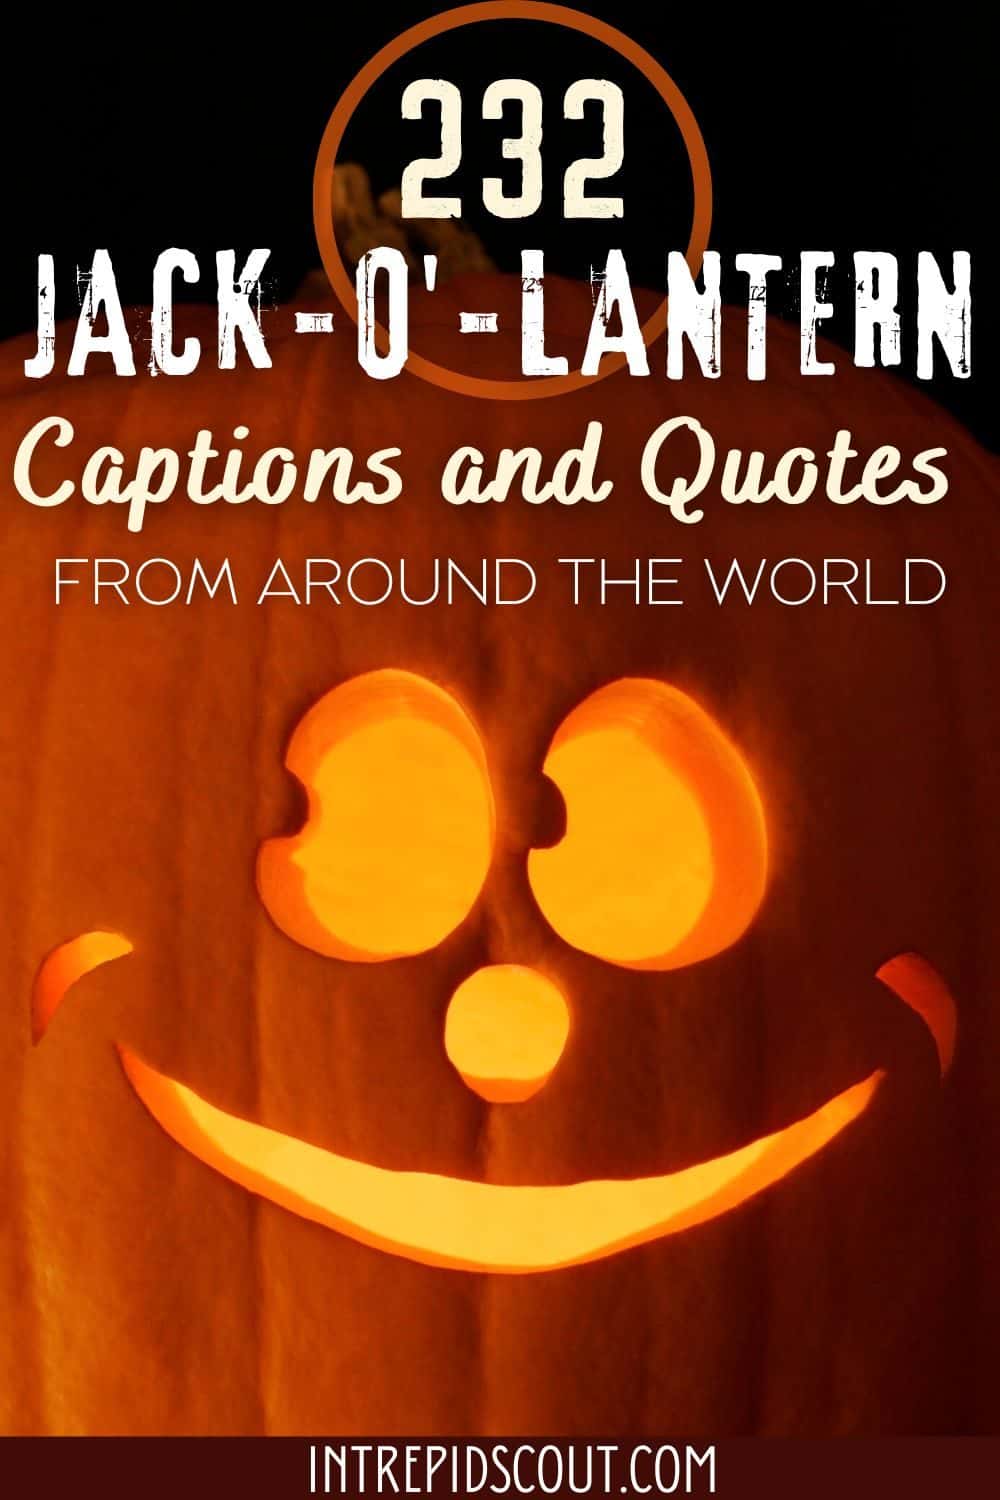 Pumpkin Captions and Quotes